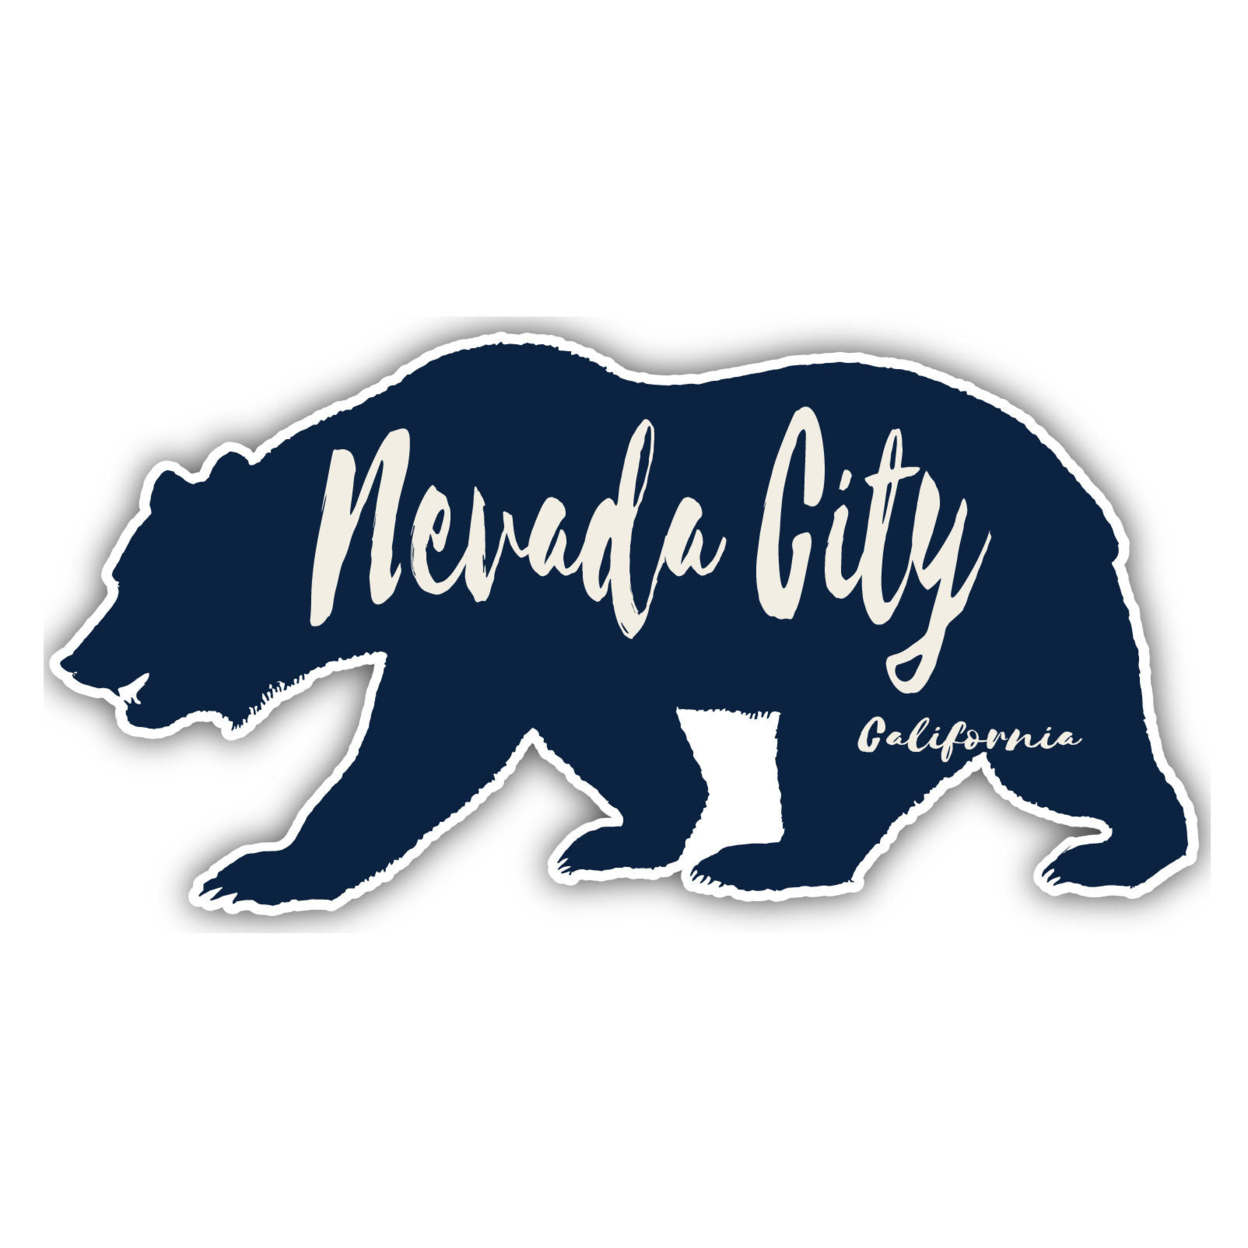 Nevada City California Souvenir Decorative Stickers (Choose Theme And Size) - Single Unit, 2-Inch, Bear